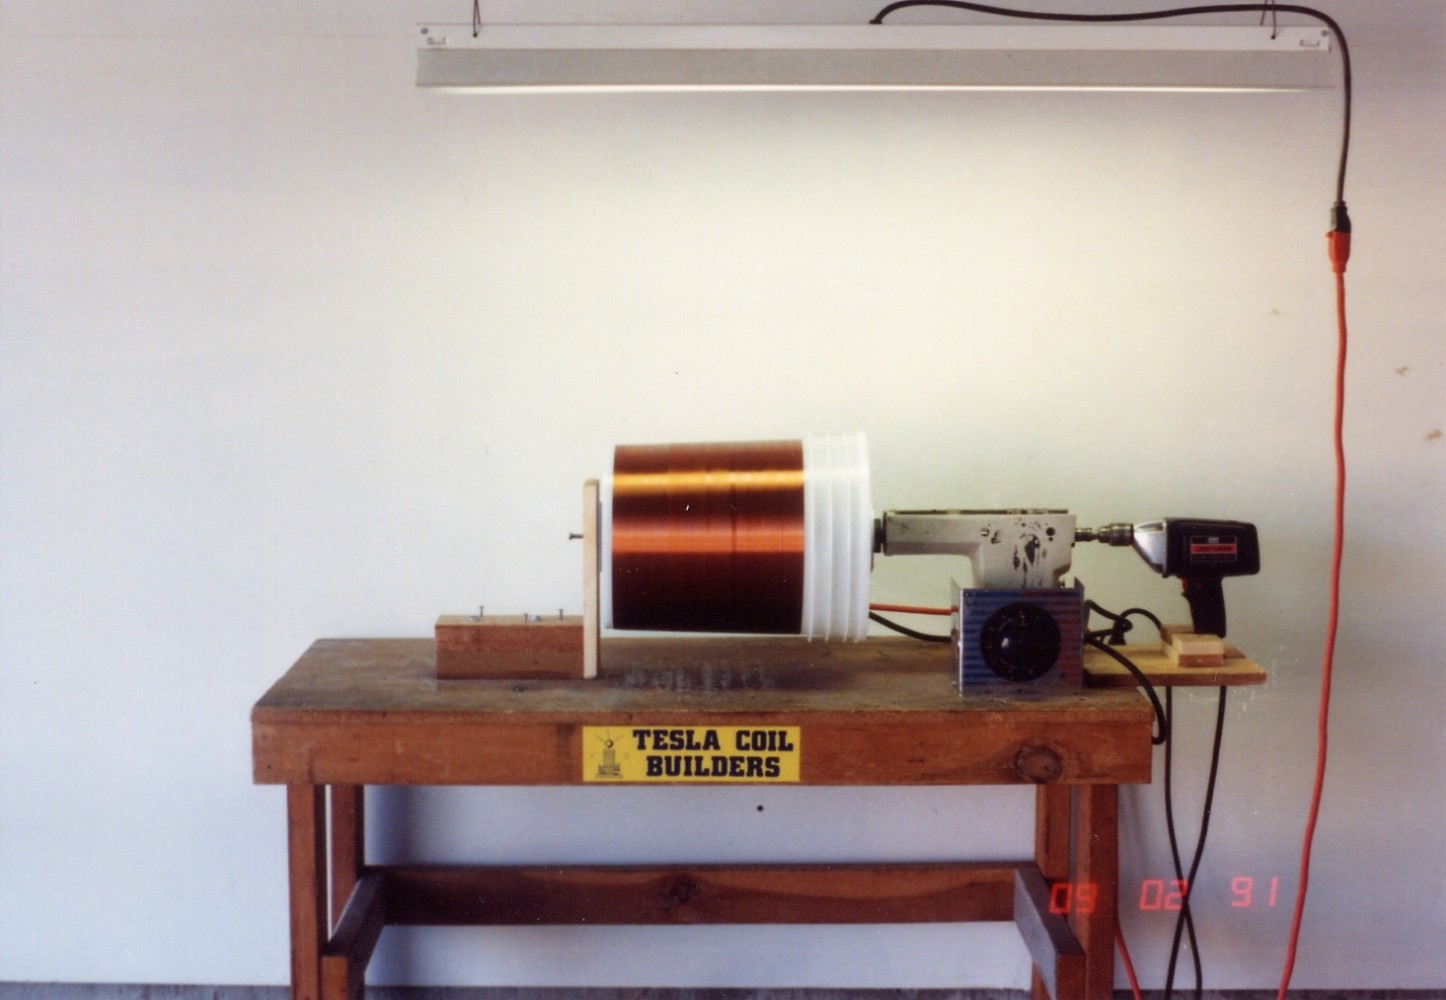 1991 Tesla coil winding machine